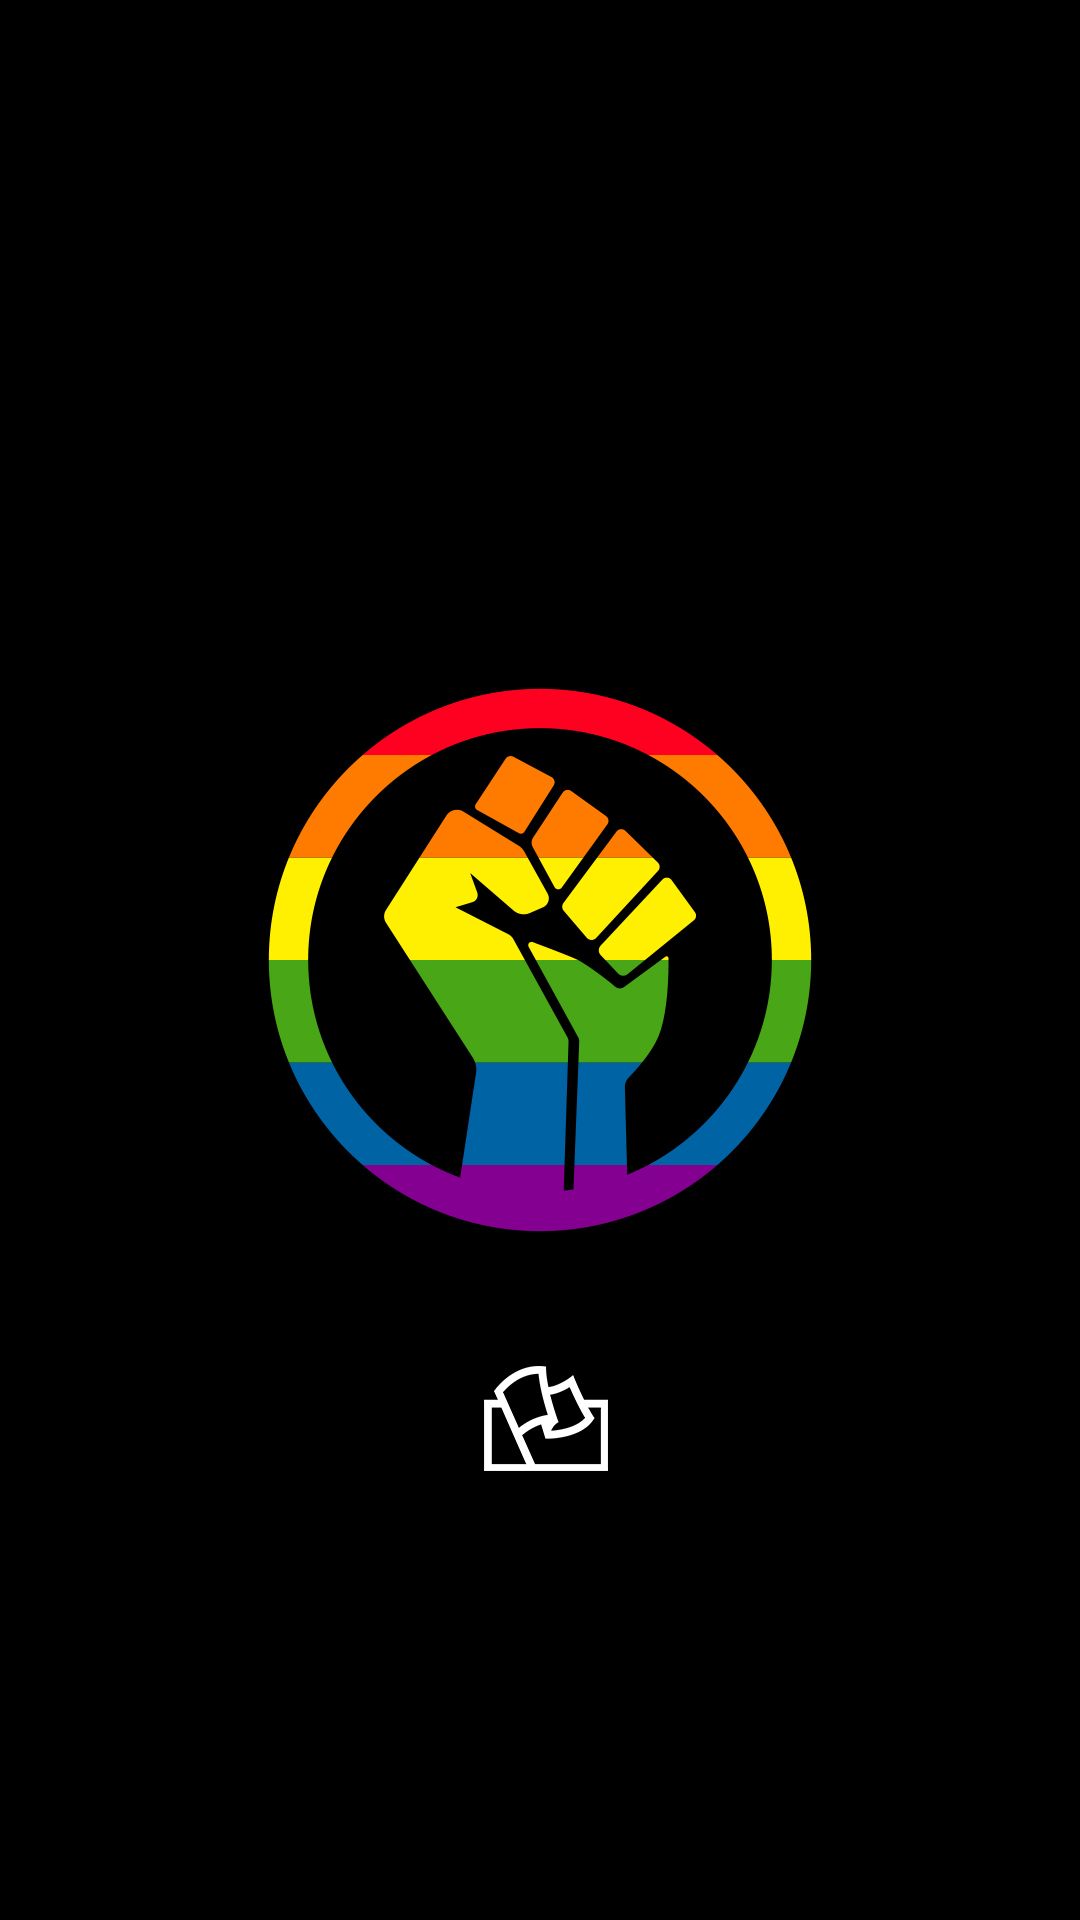 Black Lives Matter Pride Fist Phone Wallpaper. Black lives matter, Black lives matter art, Black lives